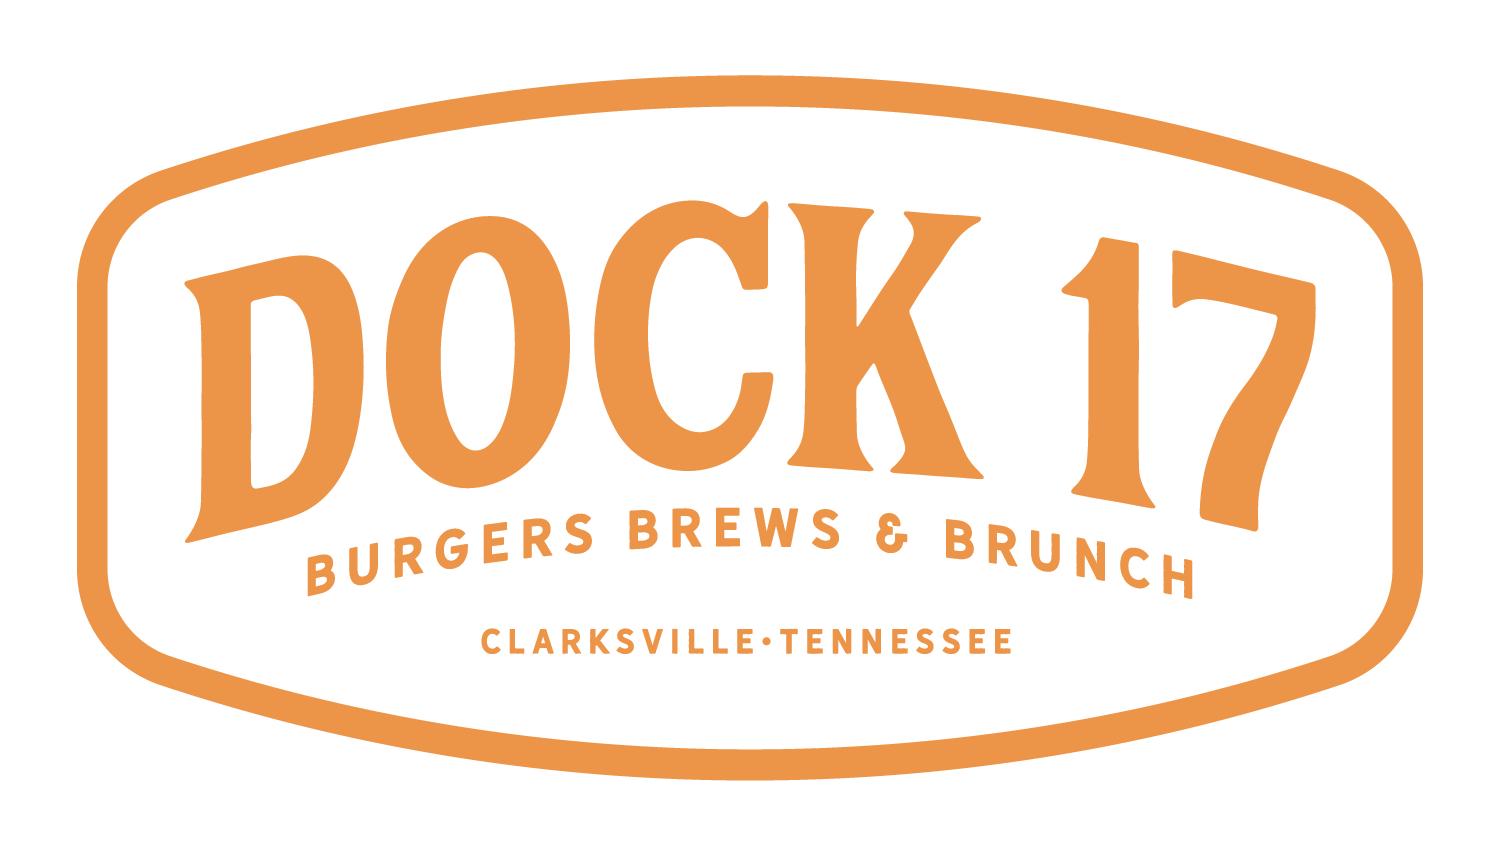 Dock 17 Burgers Brews & Brunch